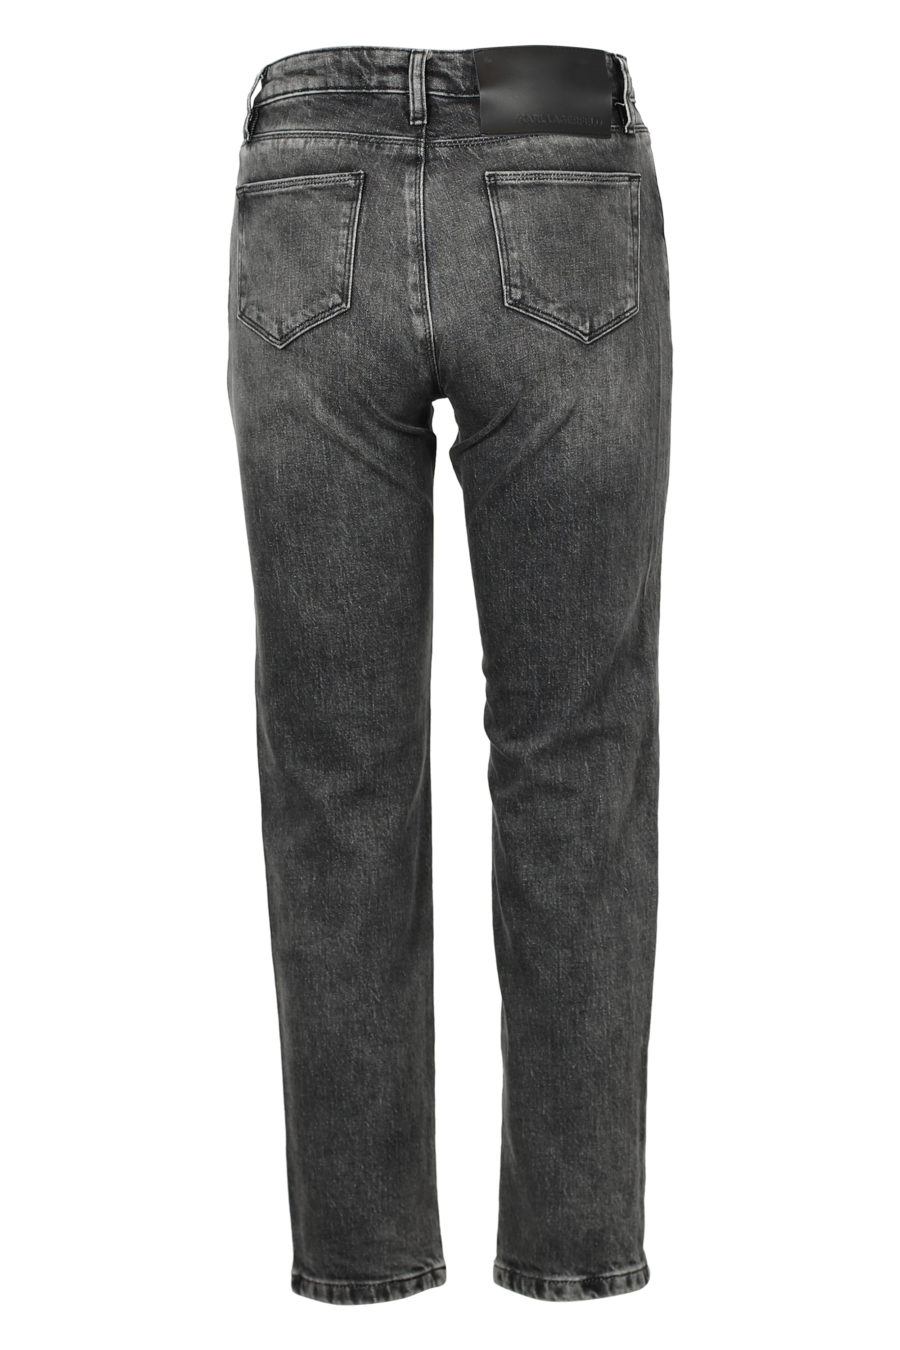 Grey denim trousers with logo beads - IMG 3160